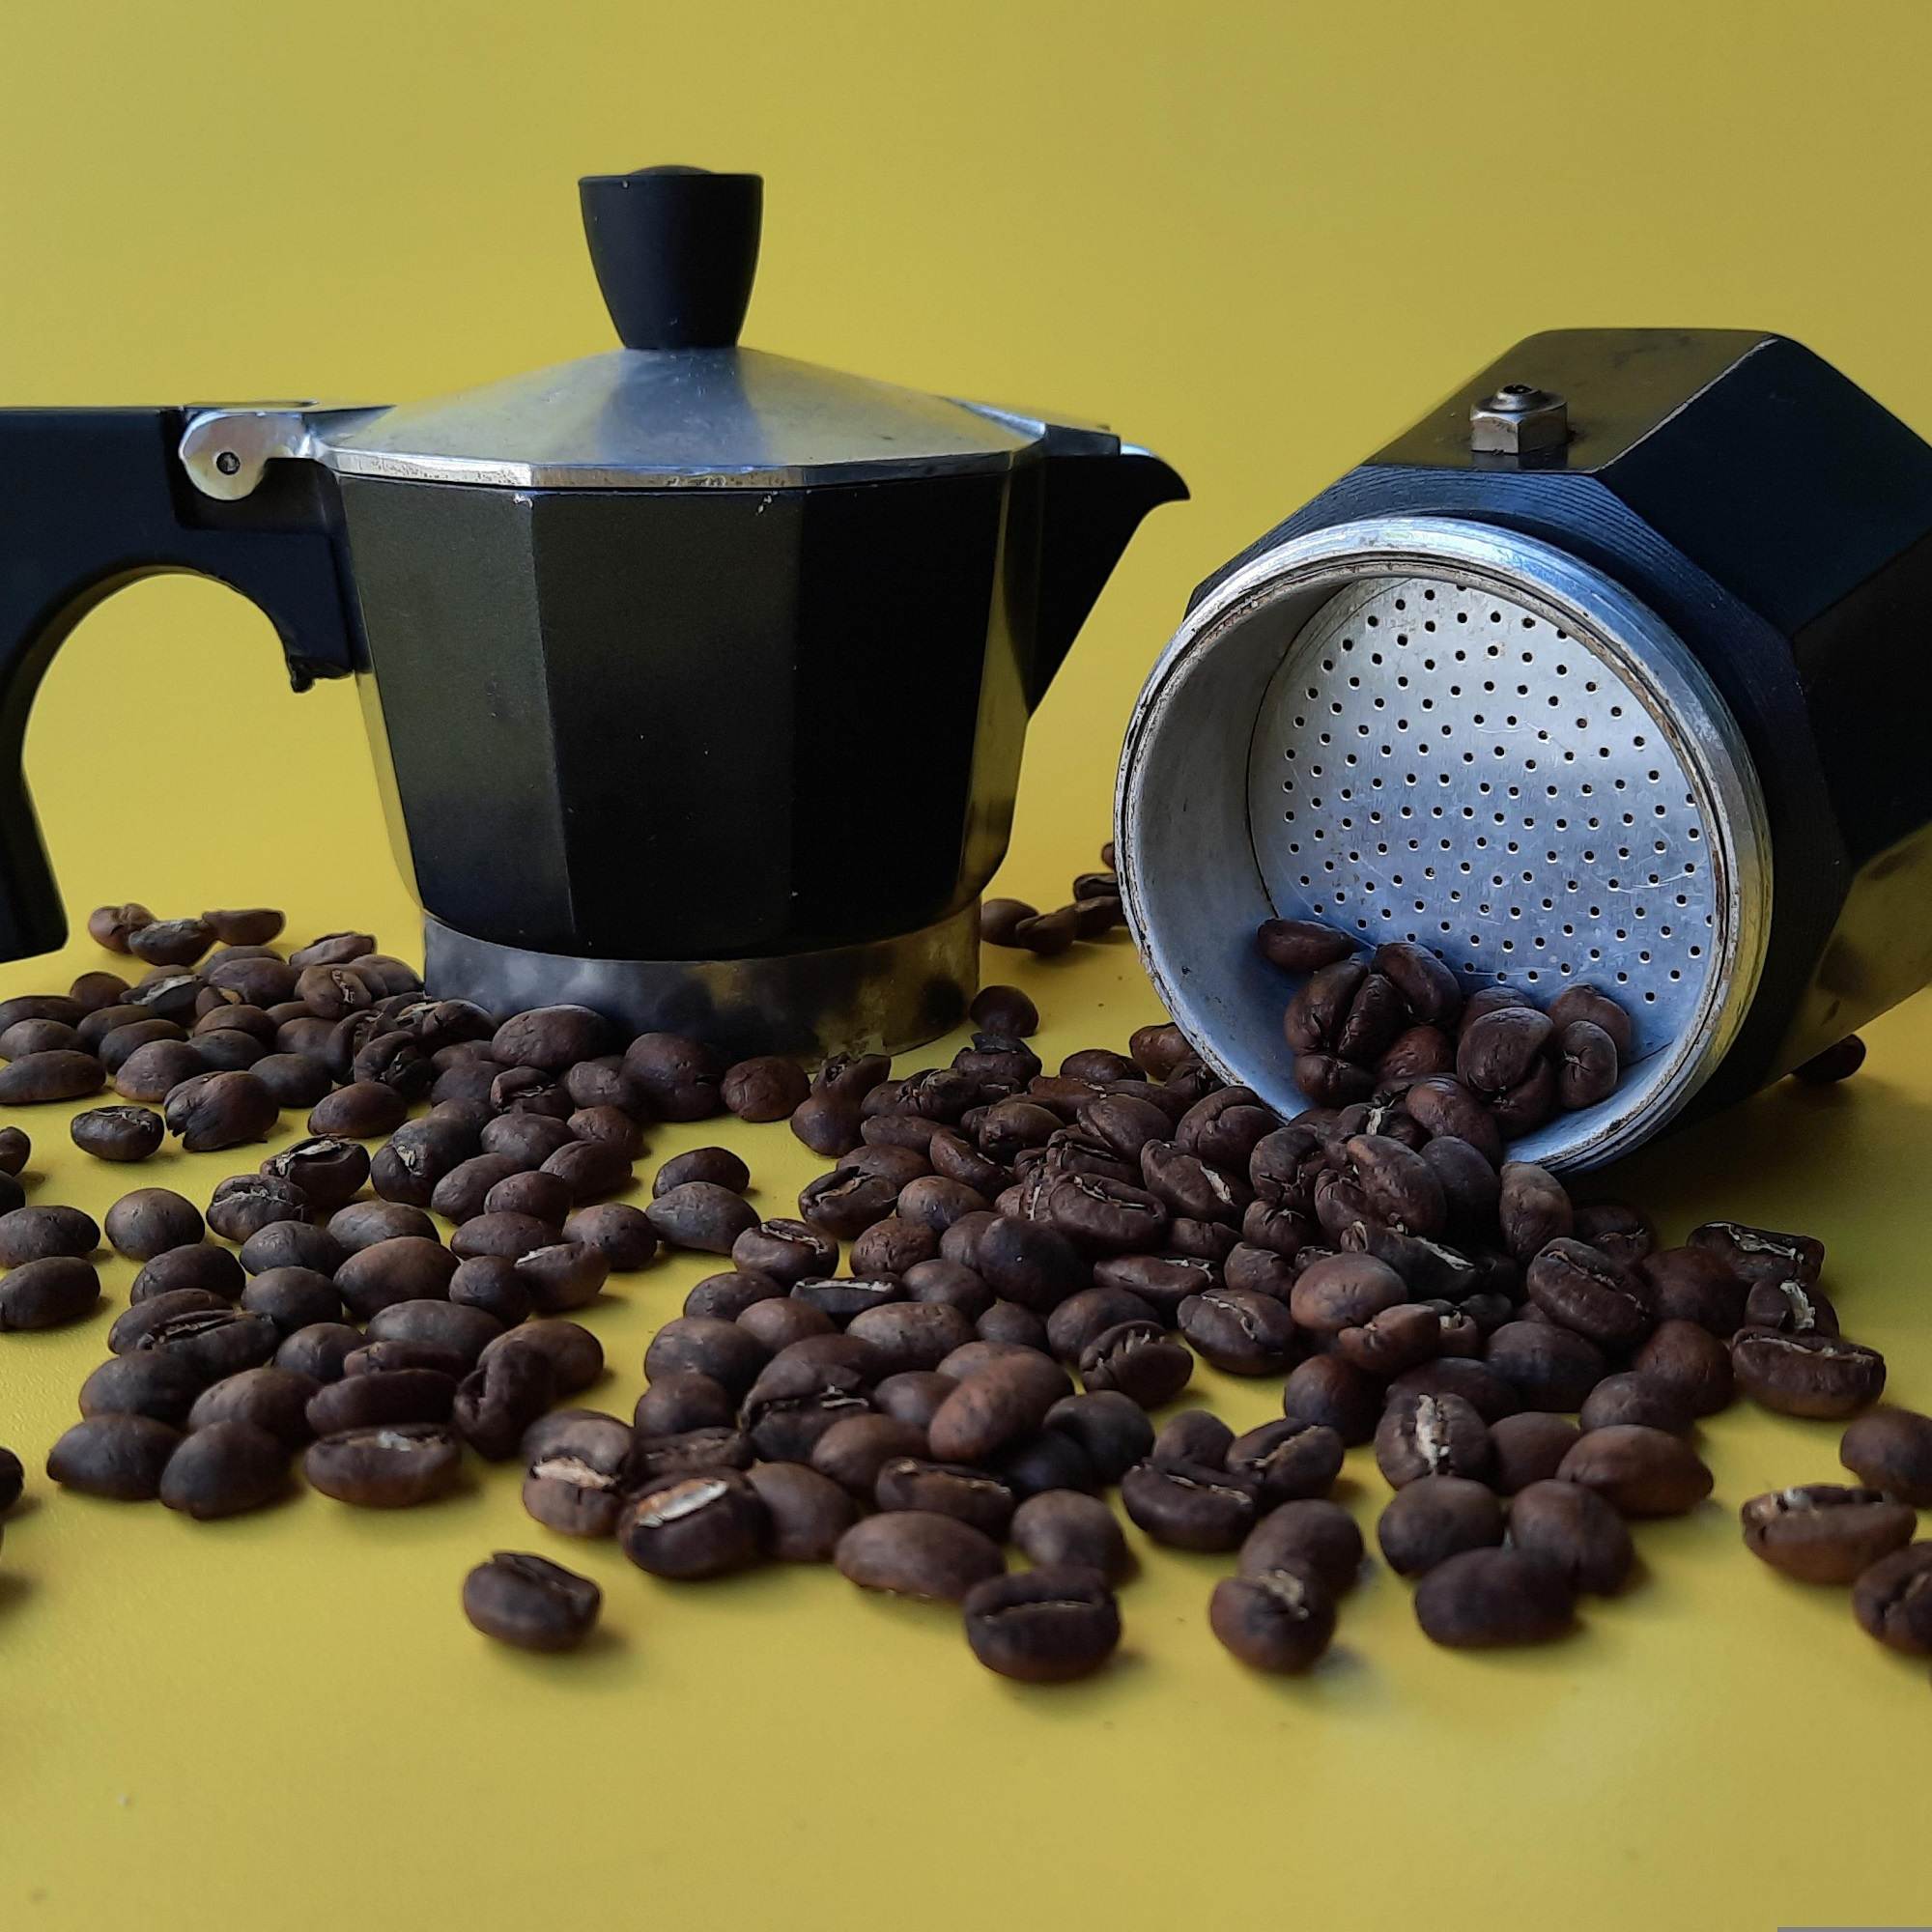 Cafetera Moka Induction (para 2 tazas) – East Crema Coffee®